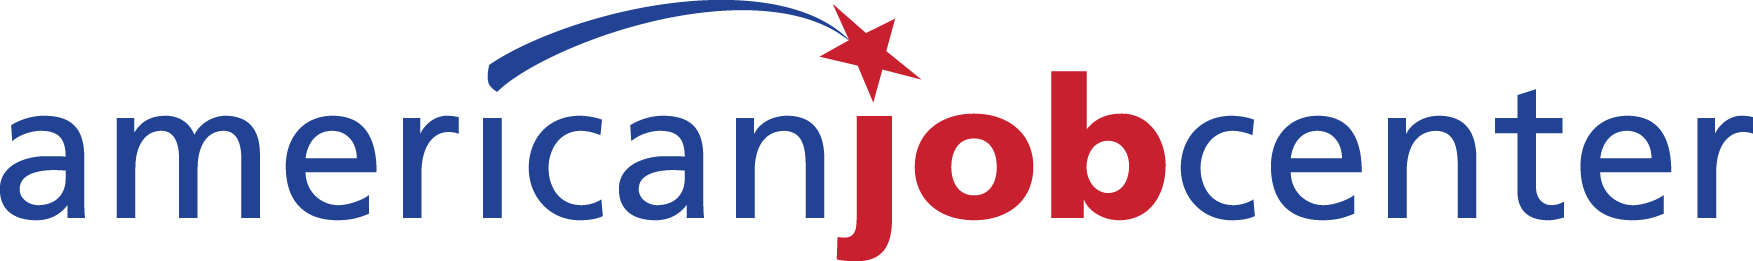 Need A Job Visit The American Job Center Nearest You - American Job Center Network Logo (1753x261)